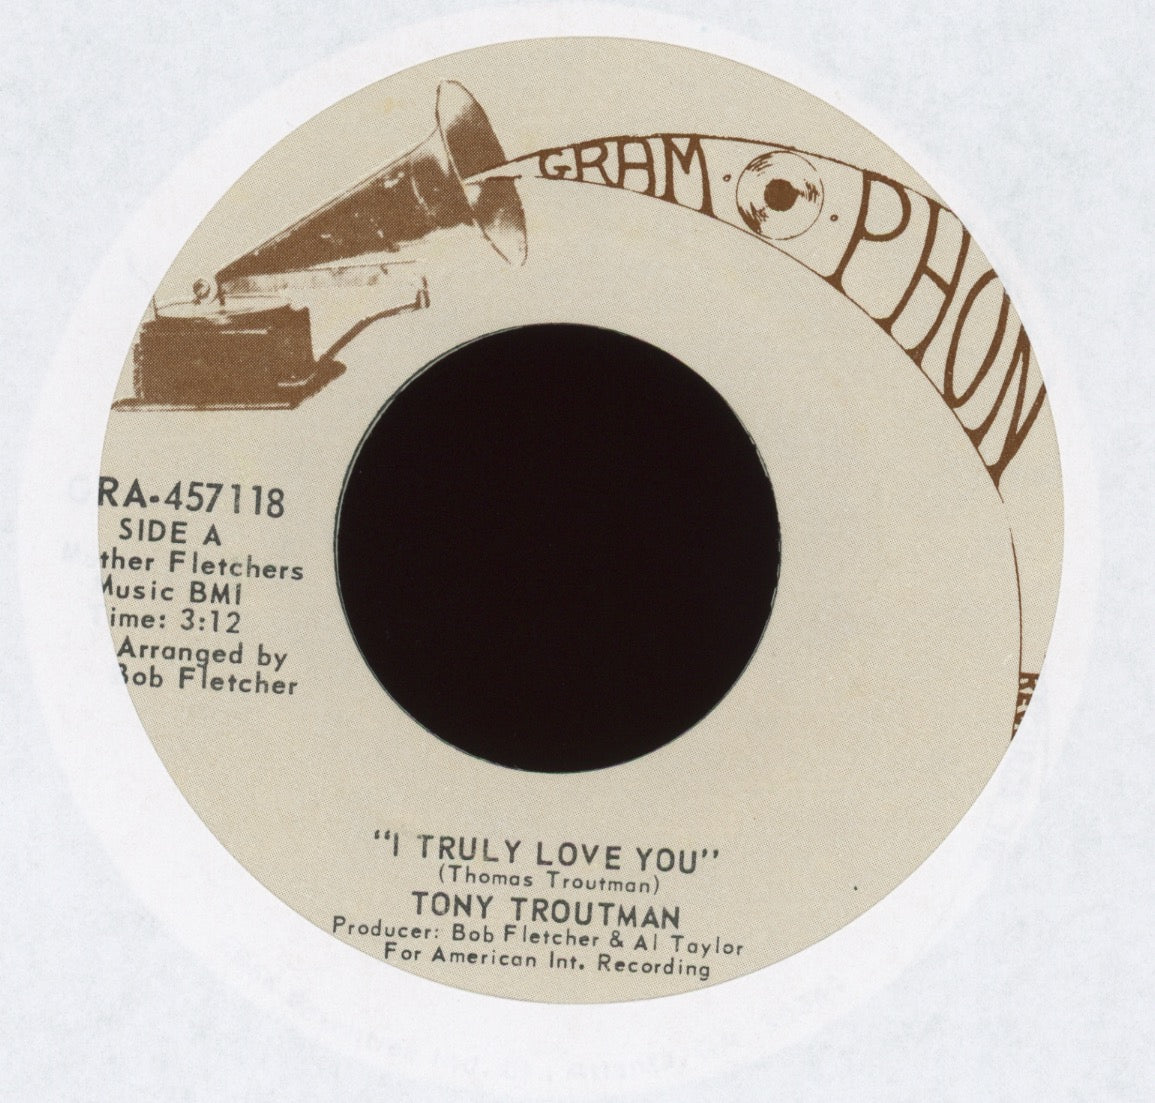 Tony Troutman - I Truly Love You on Gram O Phon